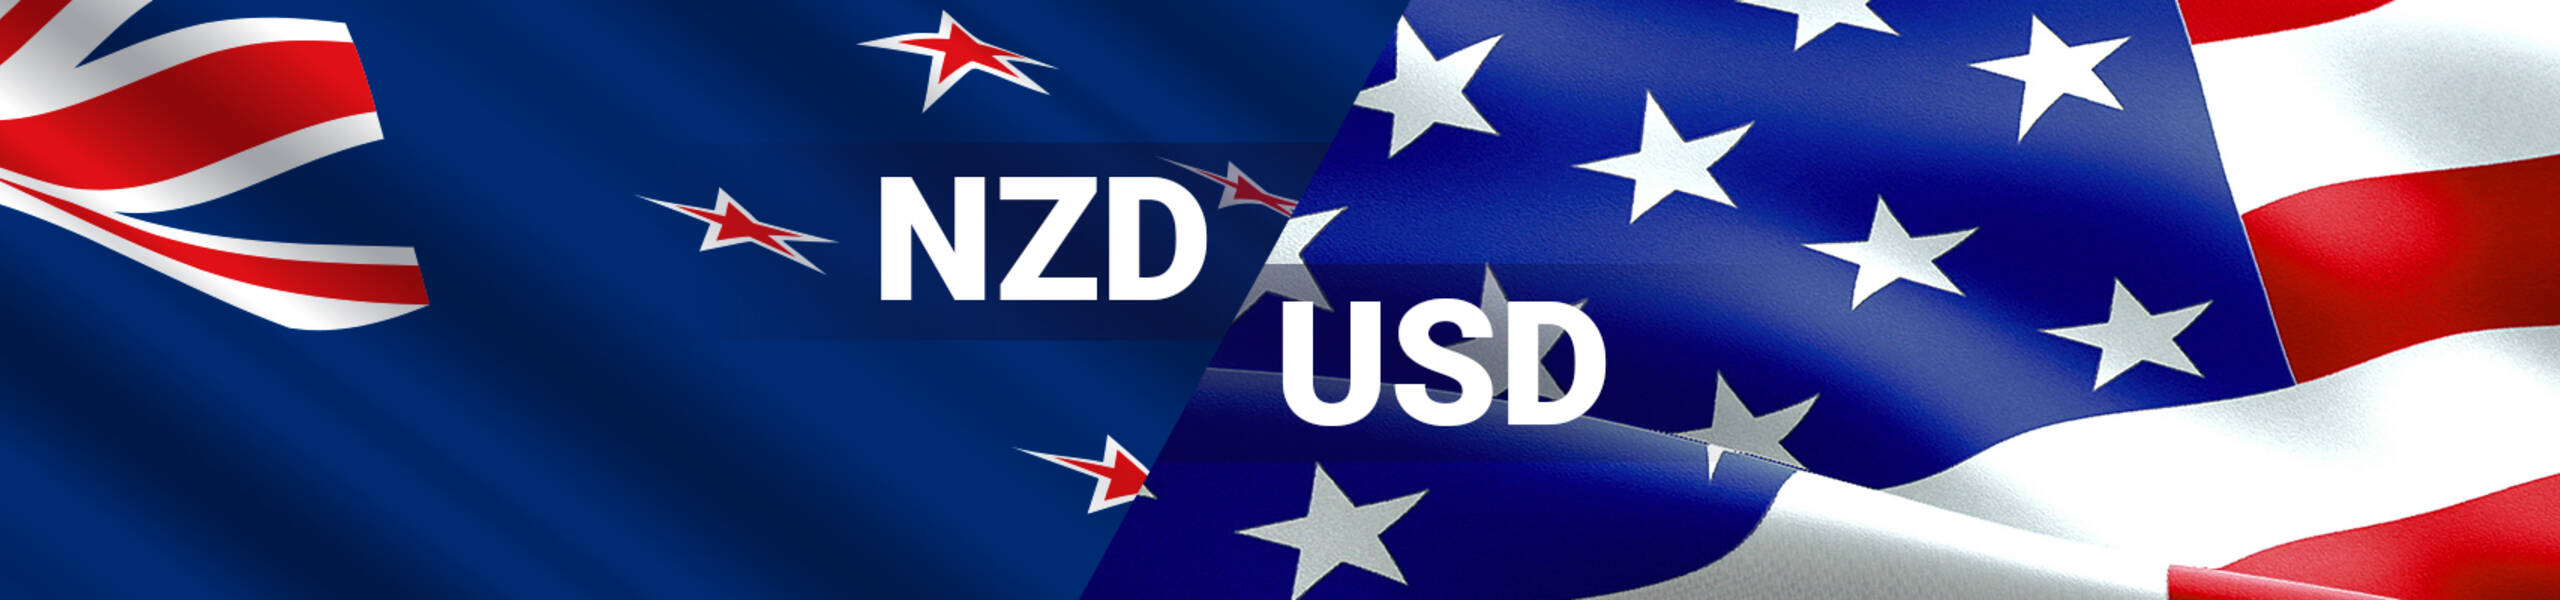 NZD/USD: kiwi came closer to the Rubicon